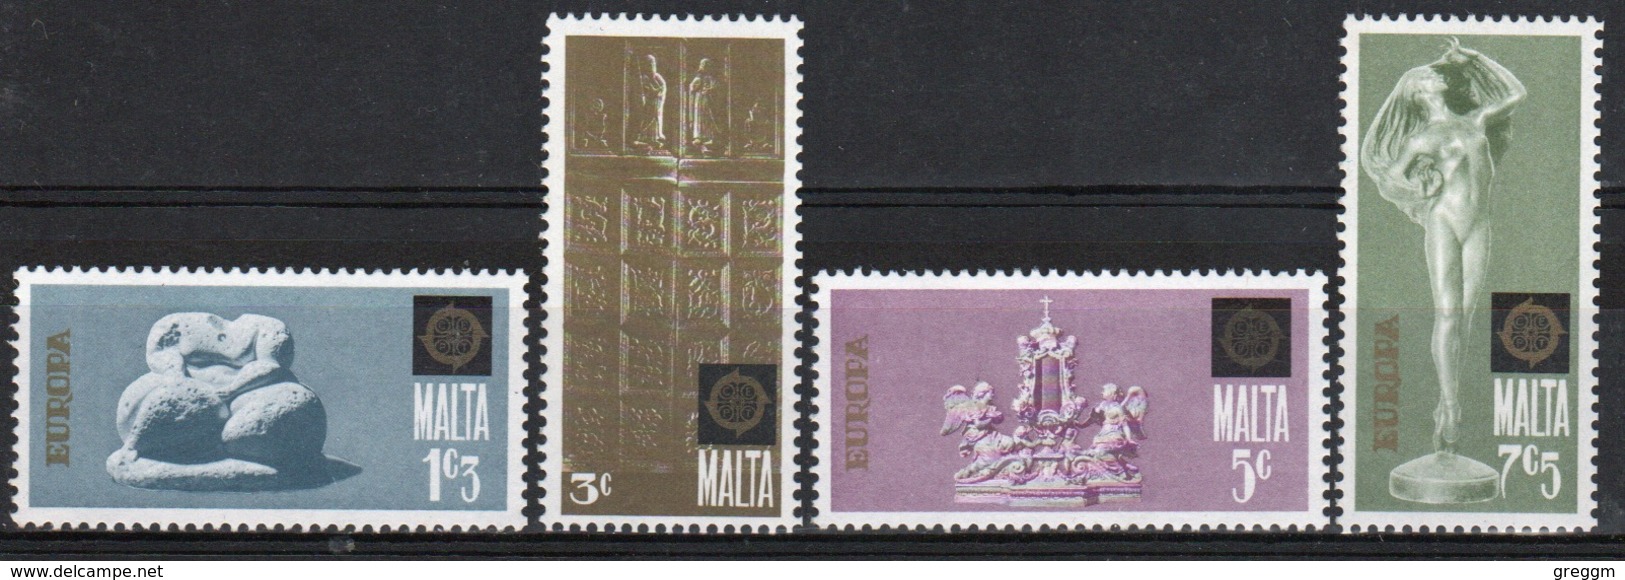 Malta 1974 Complete Set Of Stamps To Celebrate Europa. - Malta